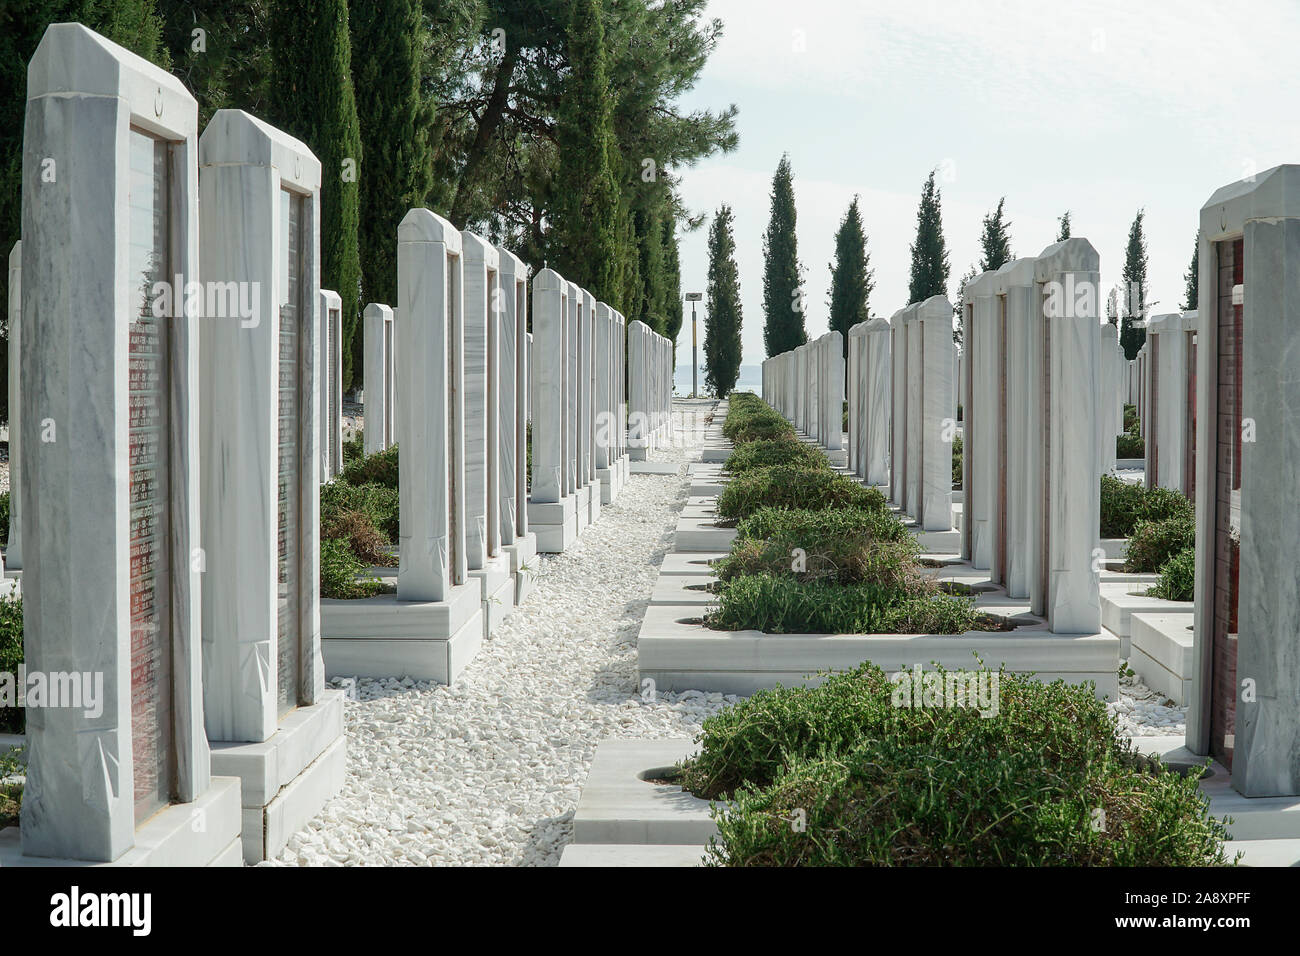 Turkish martyrs memorial military cemetery in Gallipoli, Canakkale, Turkey Stock Photo